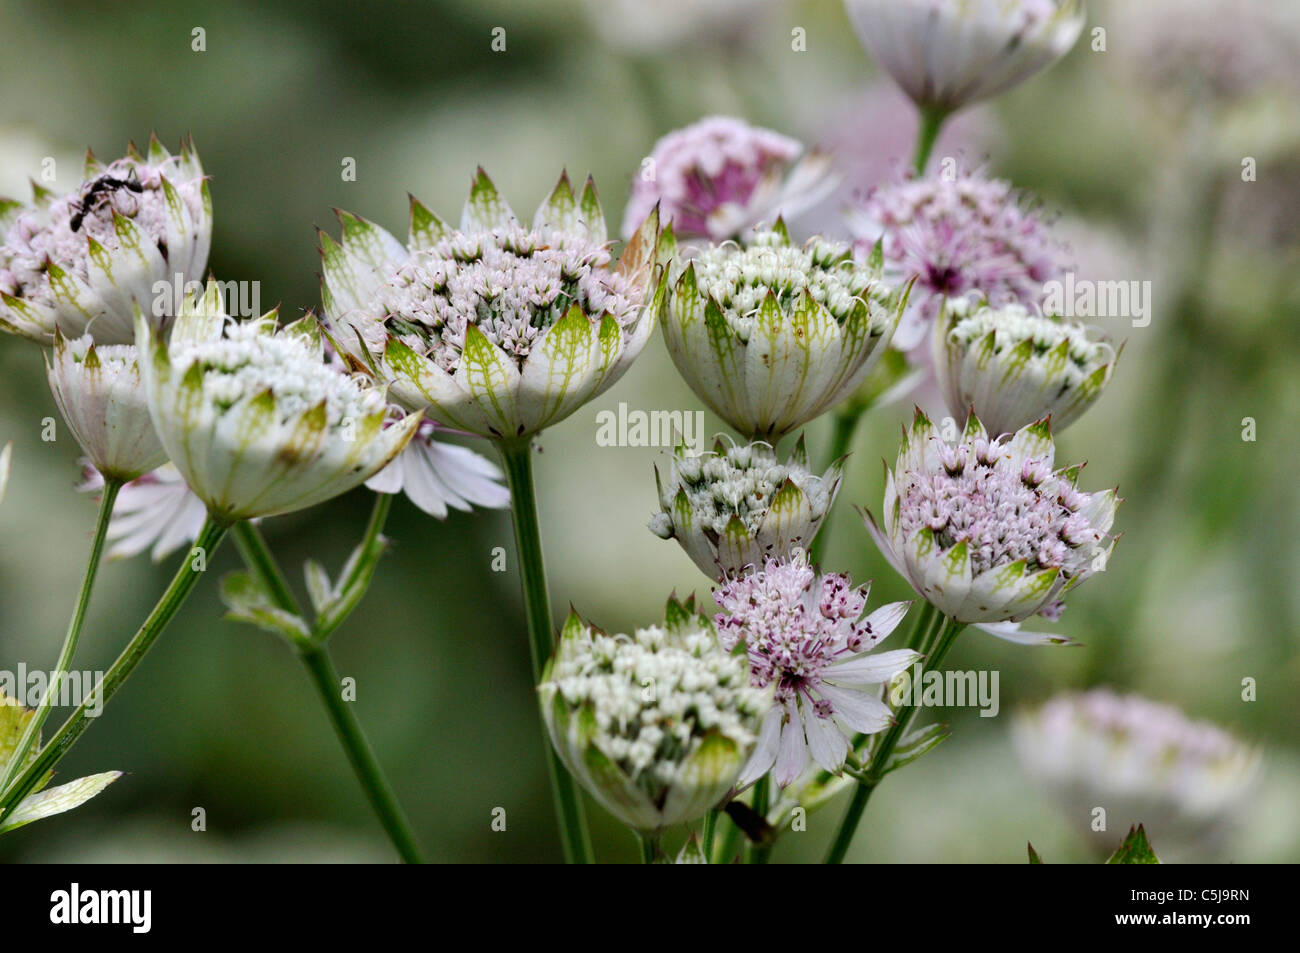 Close-up of astrantia flowerheads Astrantia Major in a summer garden. Stock Photo